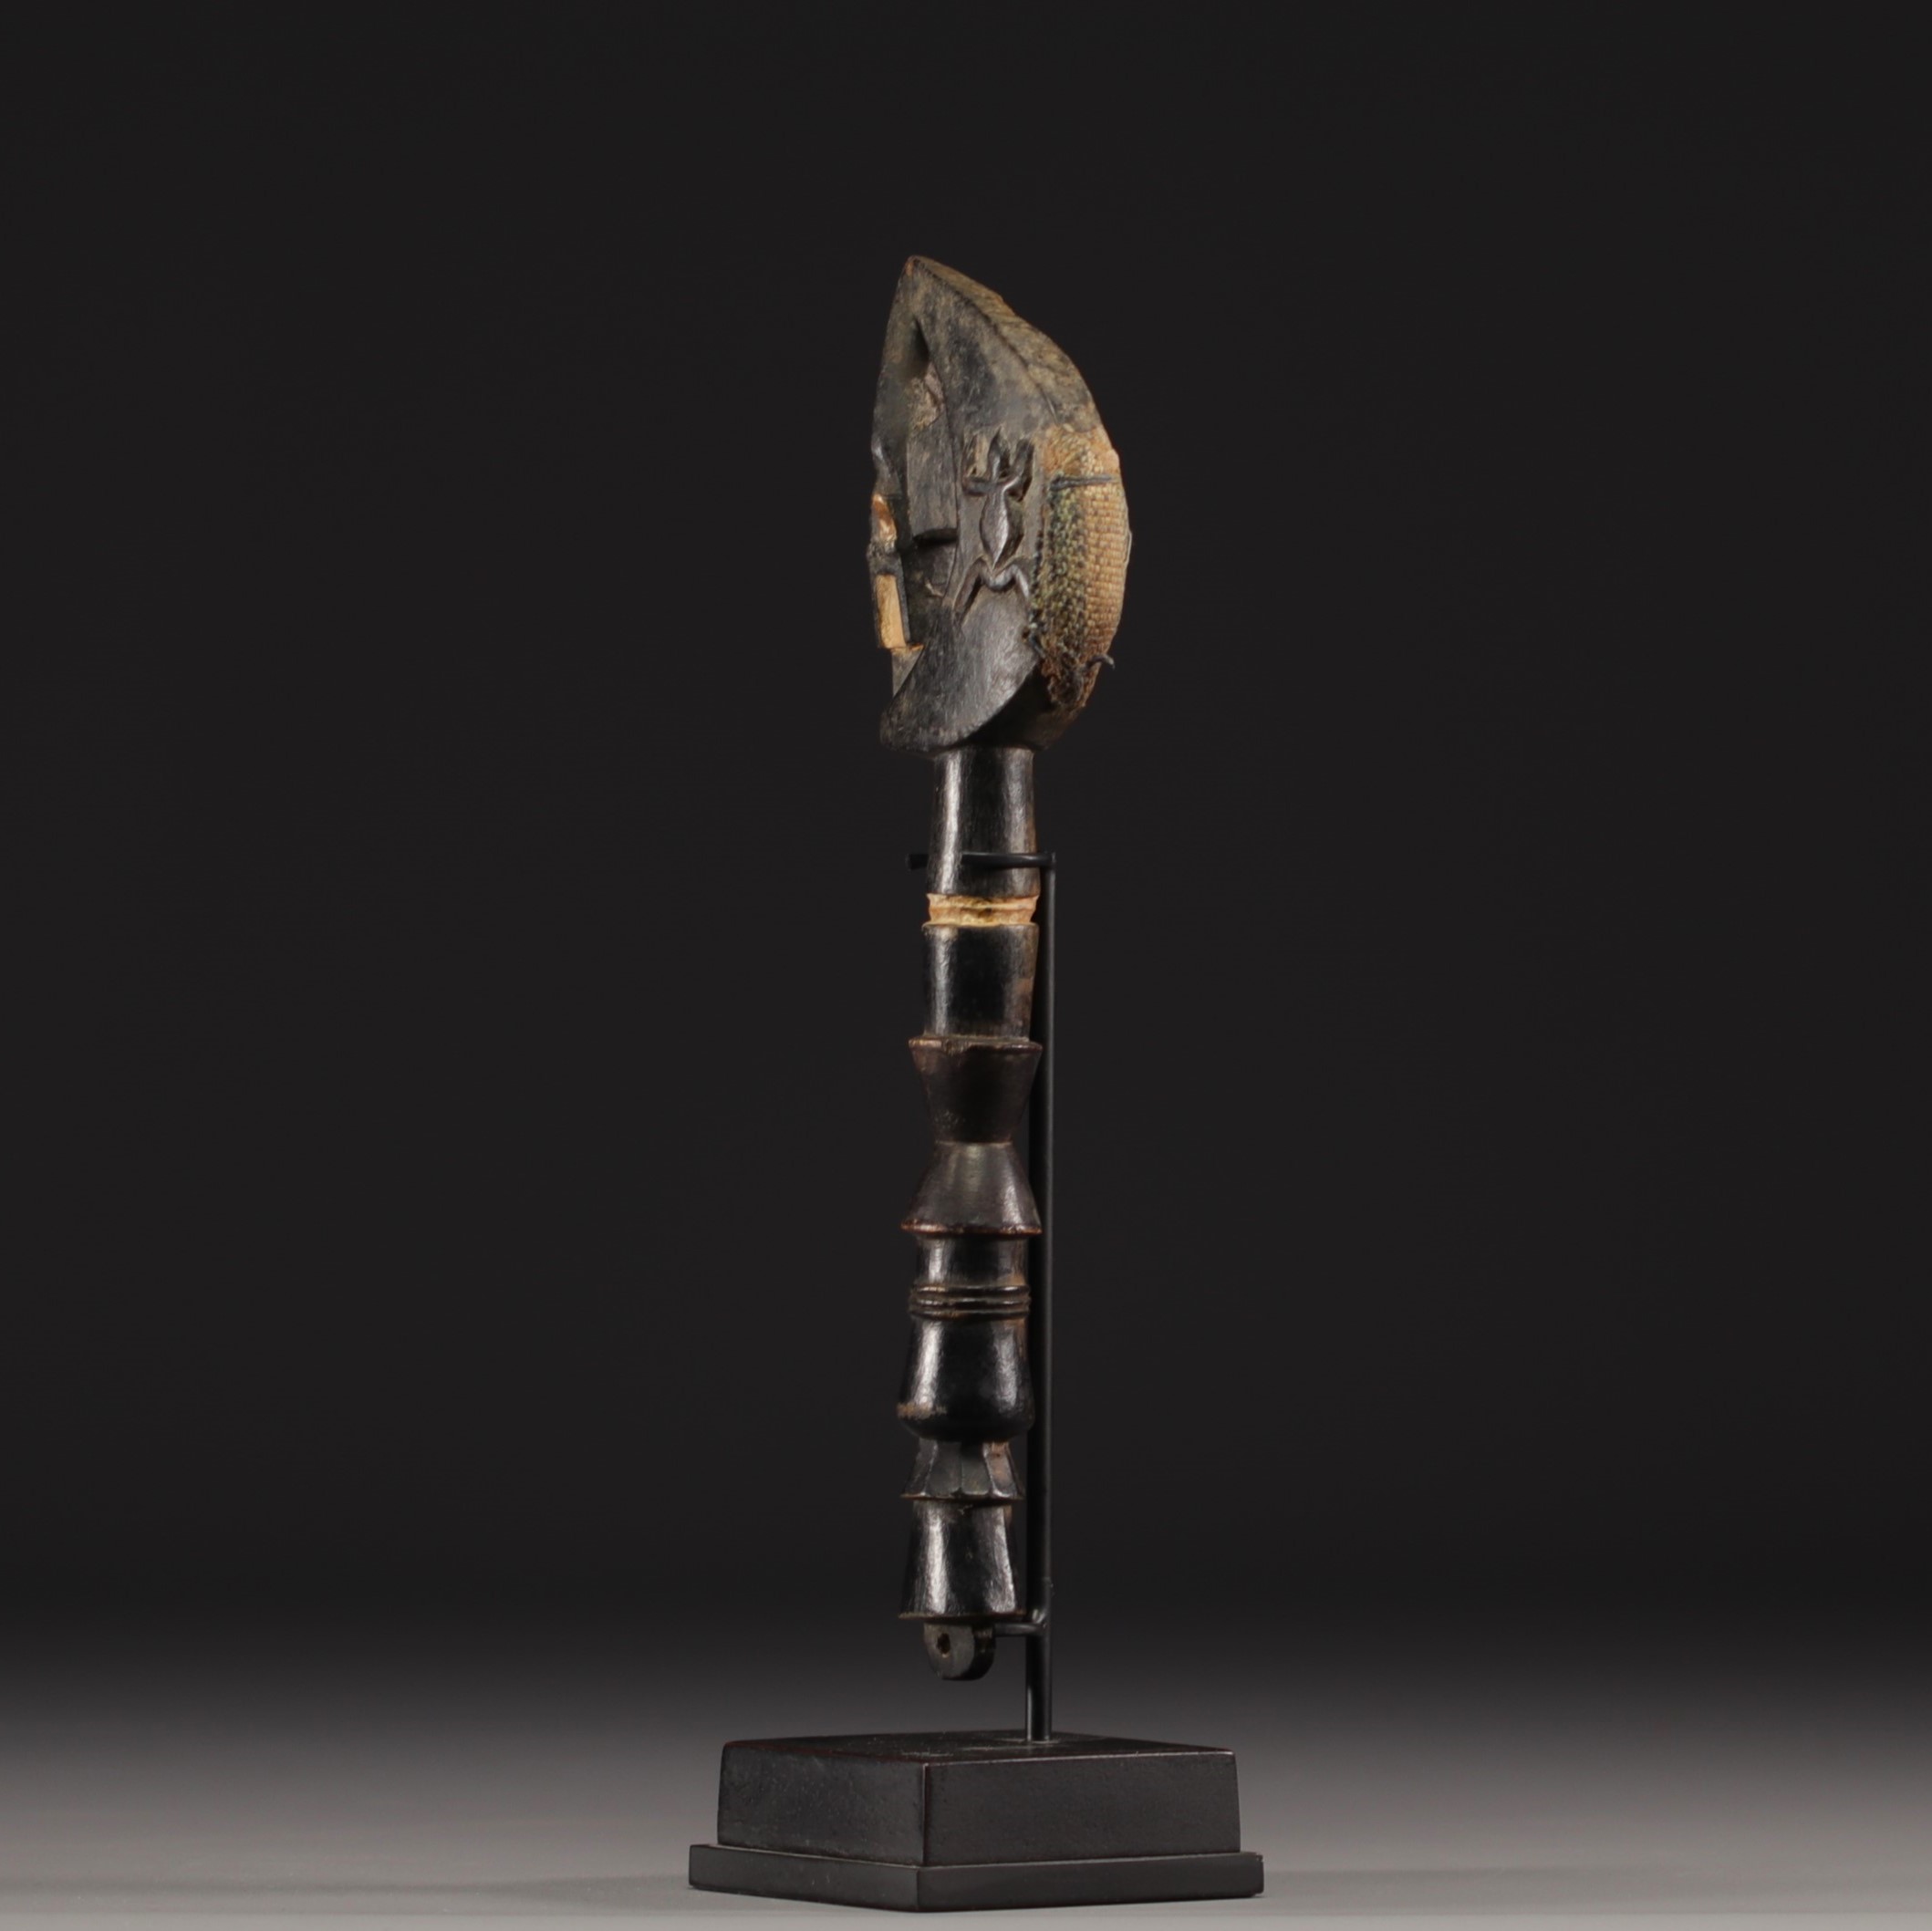 Bell hammer - Baule - Ivory Coast - Image 4 of 5